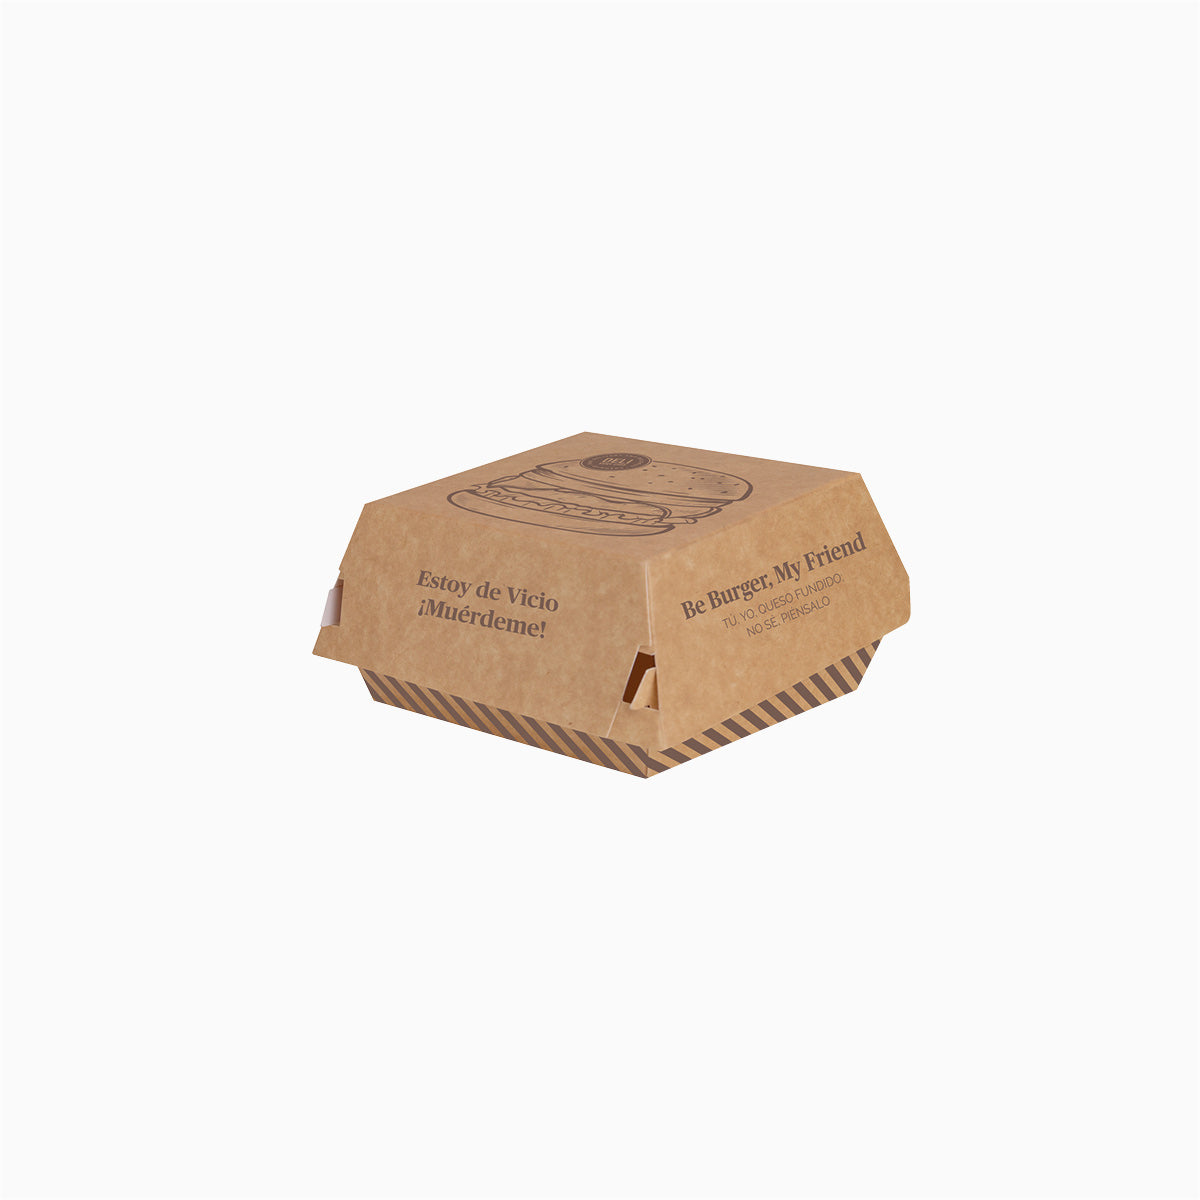 Small cardboard hamburger box